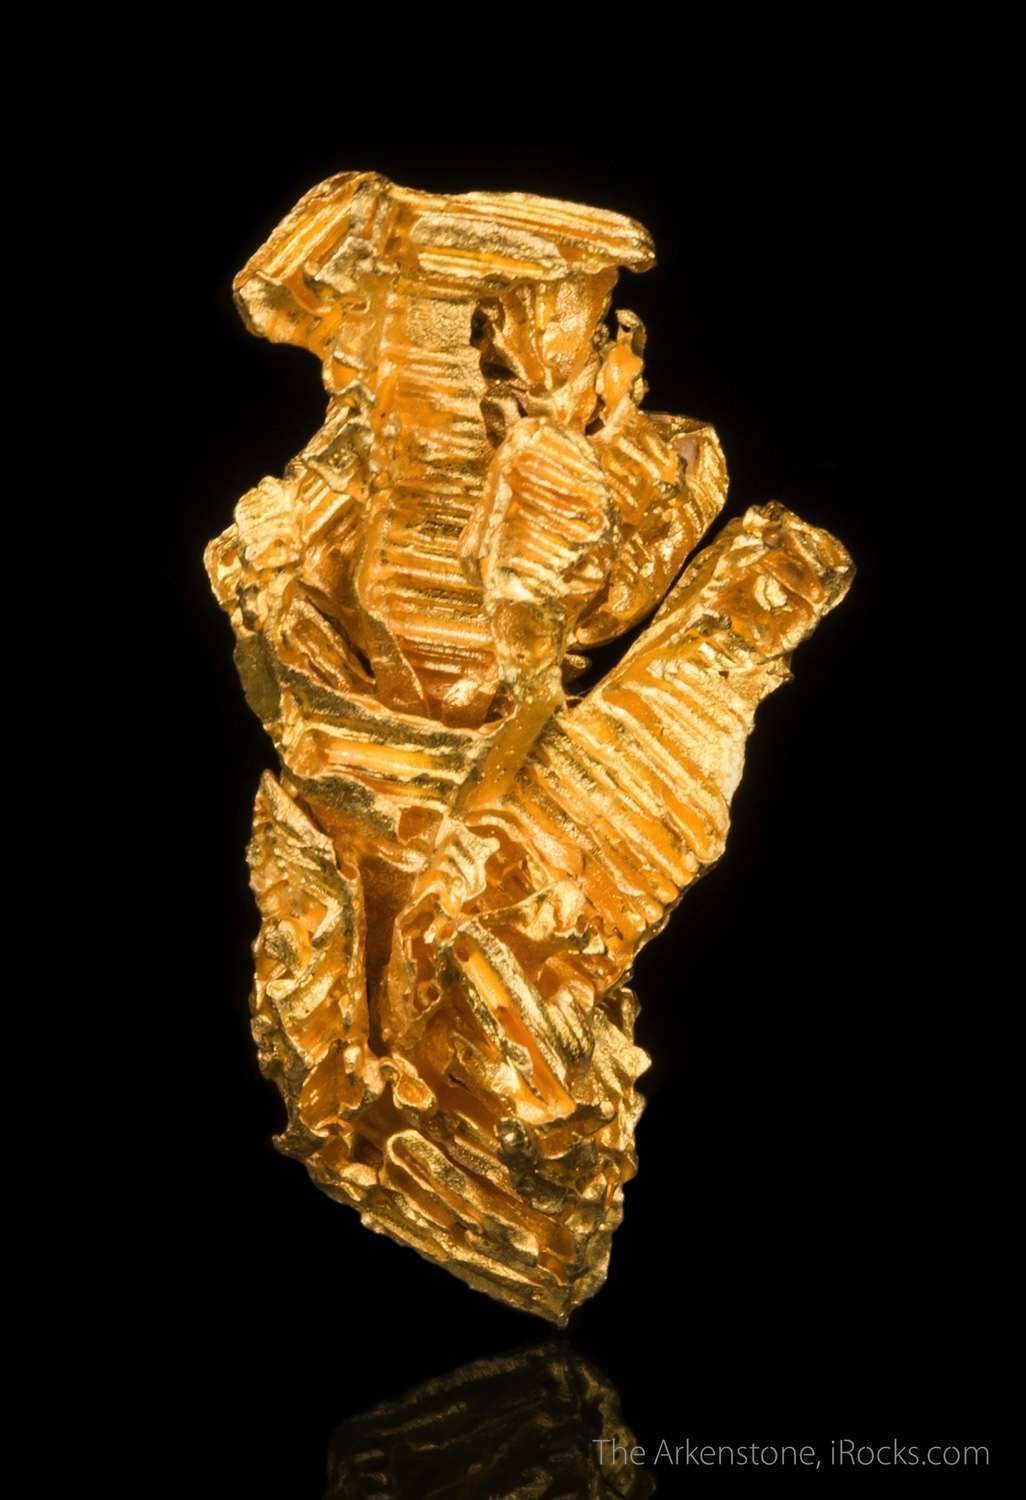 Gold - GOLD16-05 - Serra de Caldeirao - Brazil Mineral Specimen